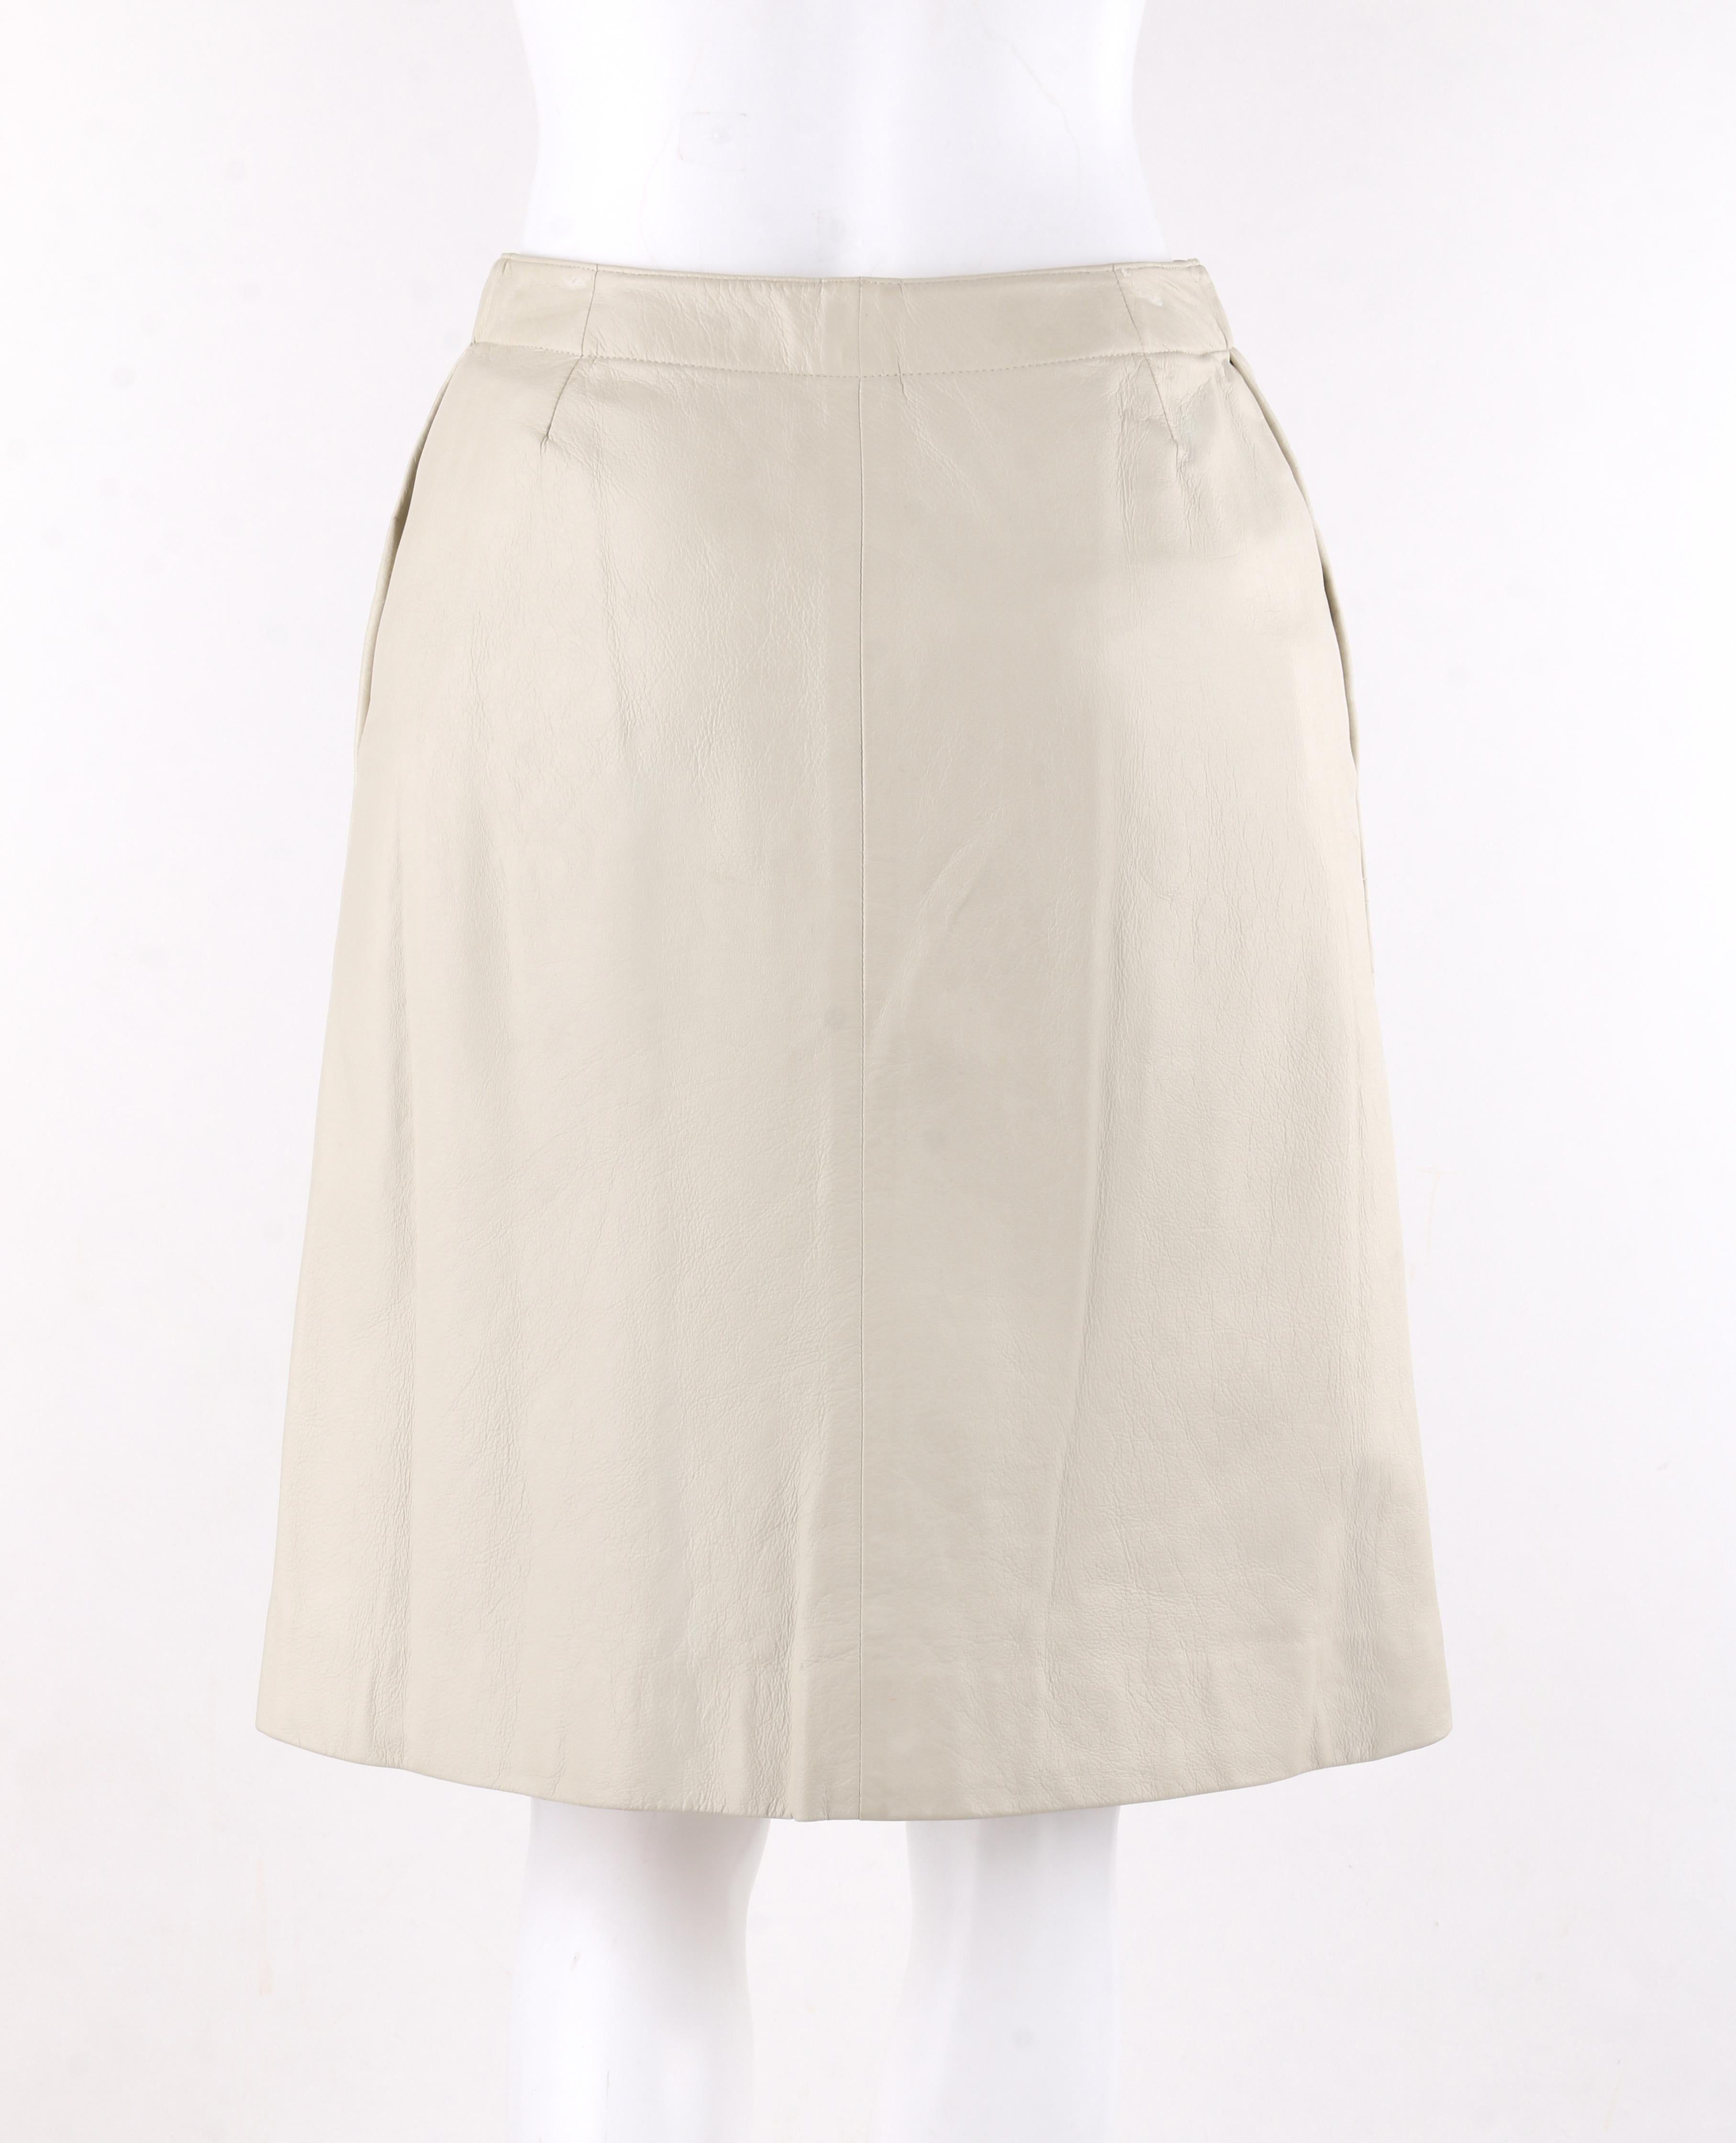 BONNIE CASHIN c.1970’s Sills Off-White Leather Gold Twist Lock Jacket Skirt Set For Sale 2